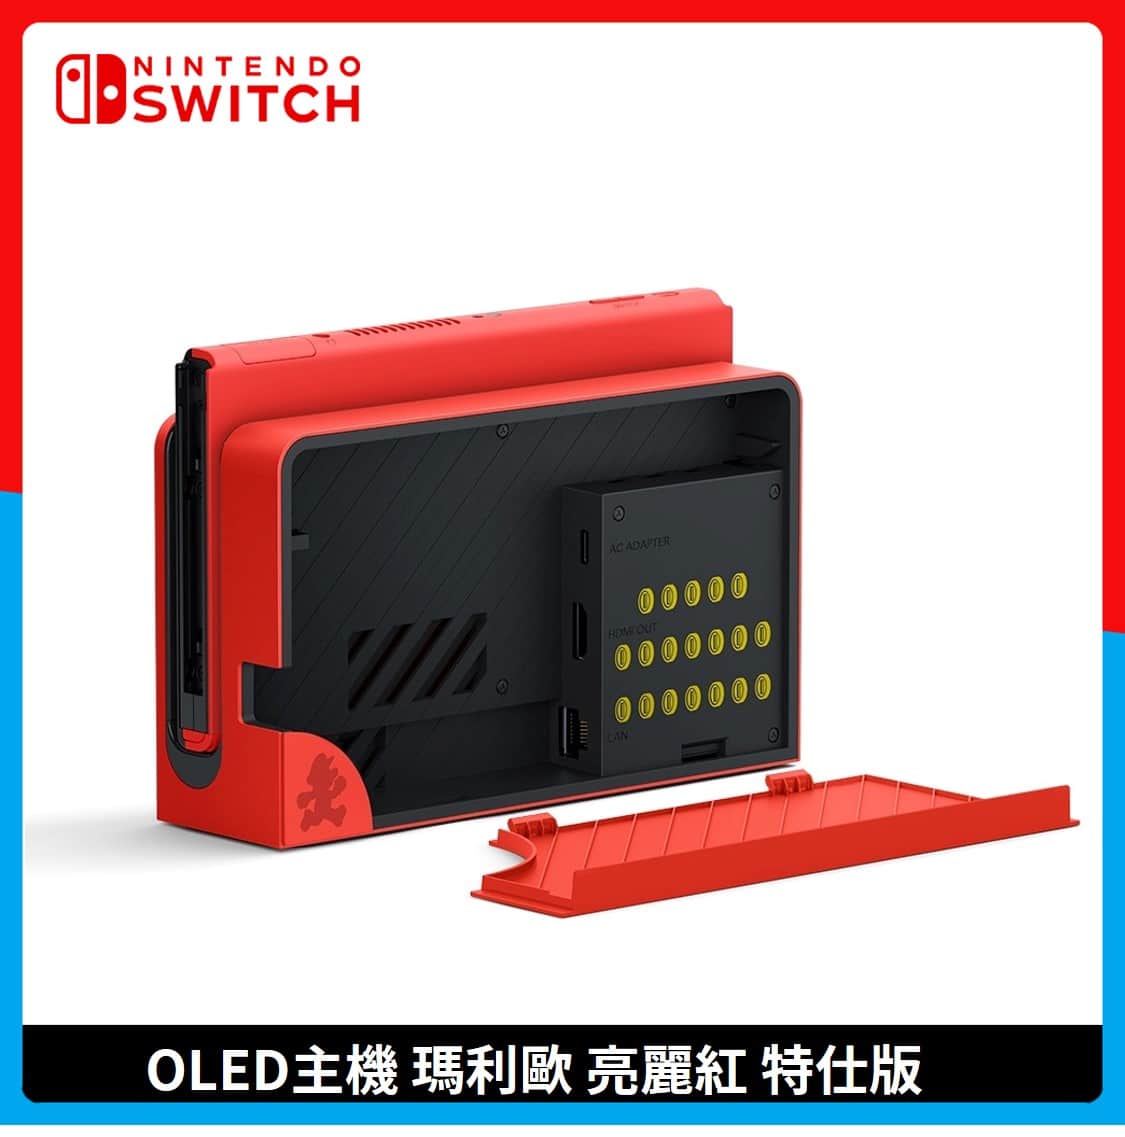 Nintendo Switch OLED主機瑪利歐驚奇組合| 法雅客網路商店